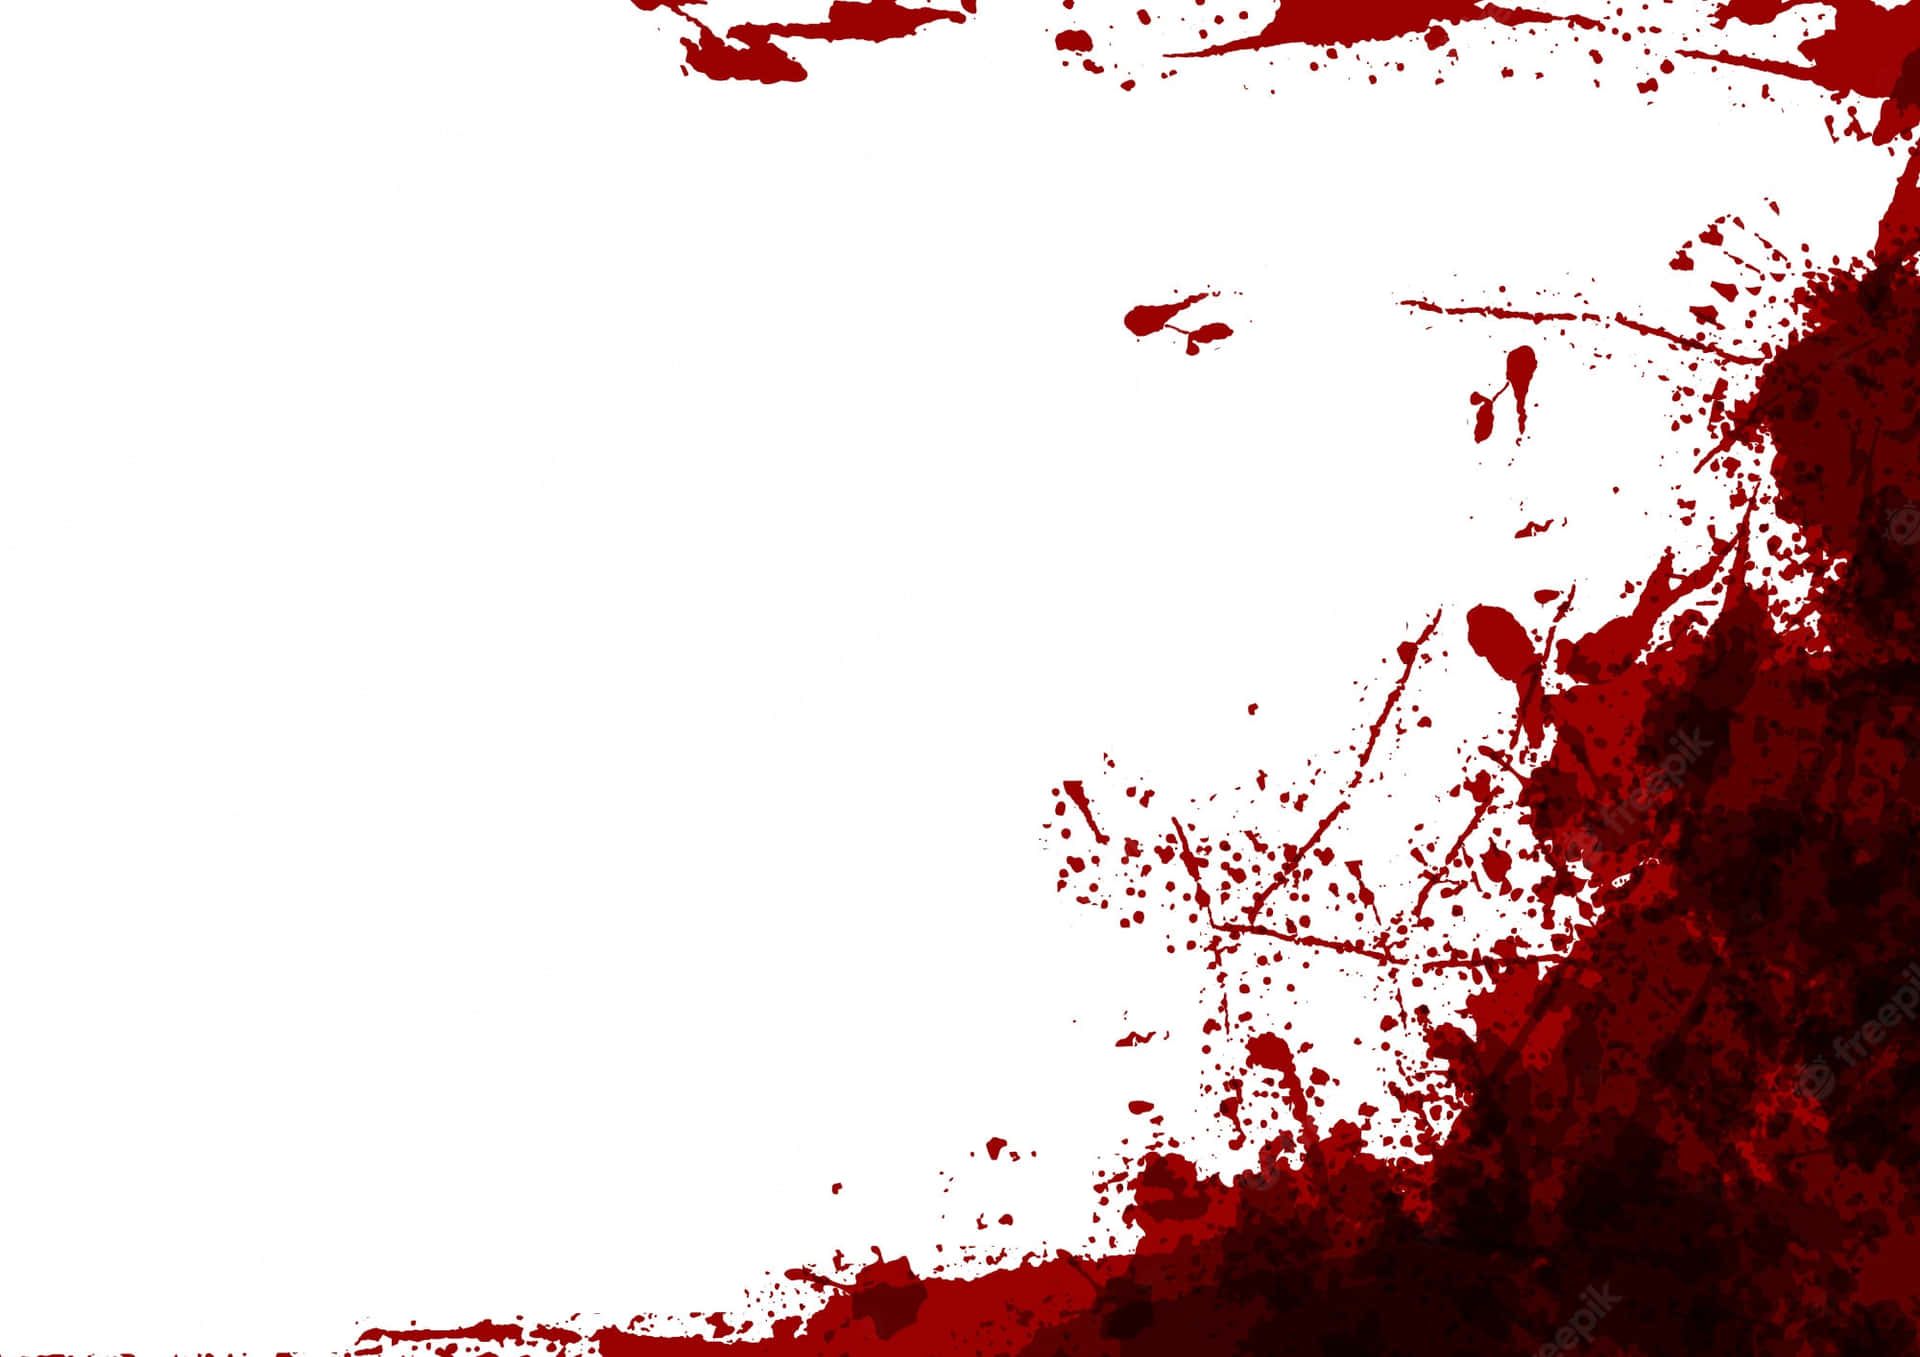 Free Blood Aesthetic Wallpaper Downloads, Blood Aesthetic Wallpaper for FREE